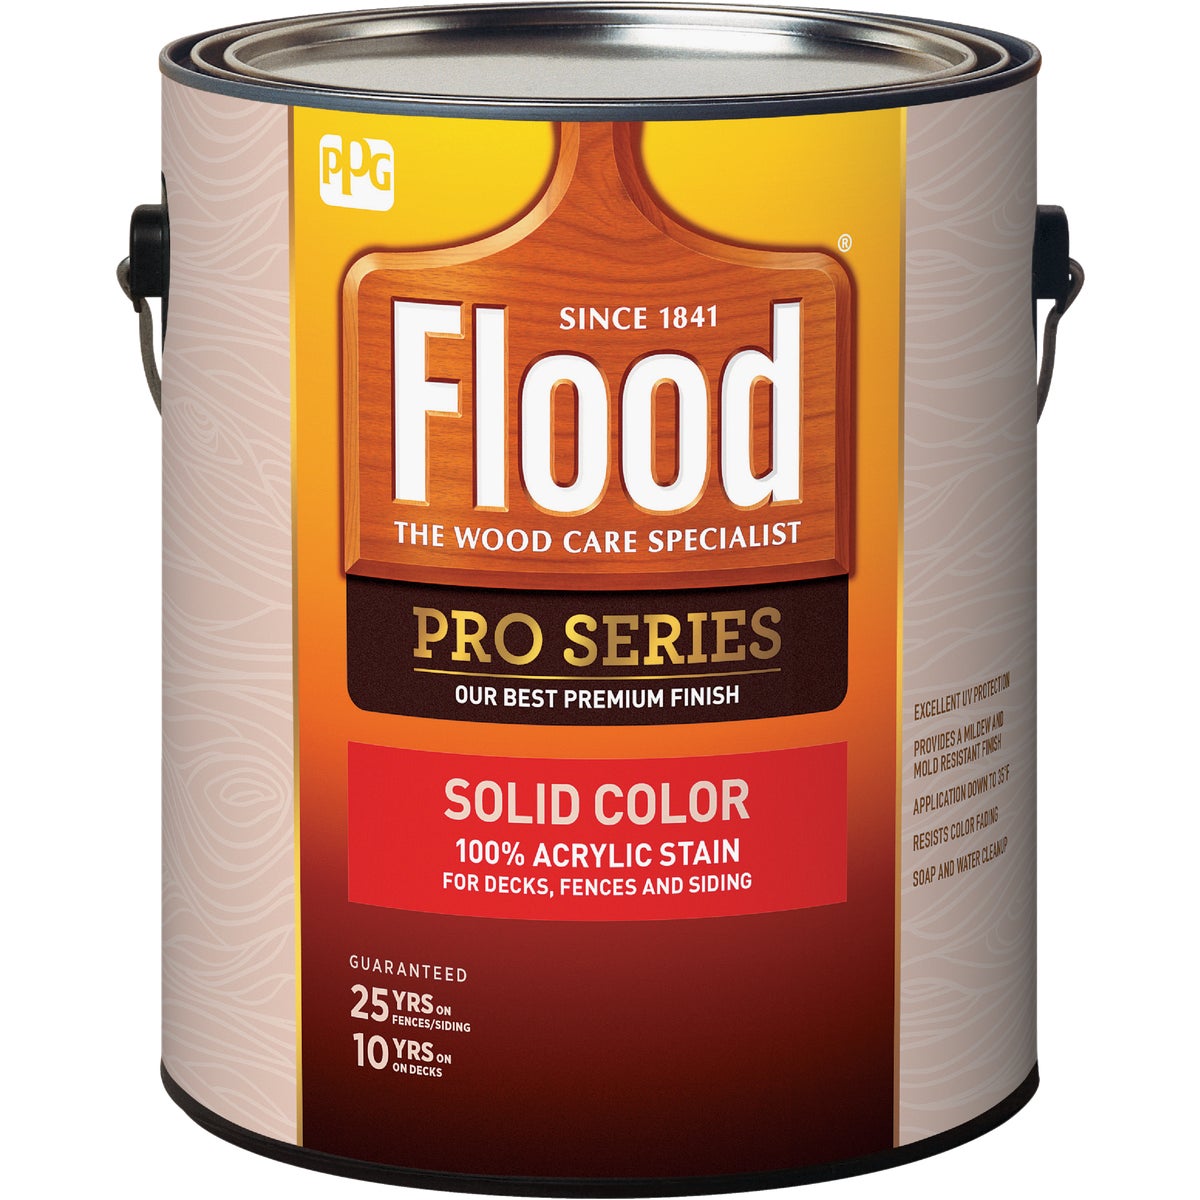 Flood 100% Acrylic Solid Color Deck, Fence And Siding Exterior Stain, Cedar, 1 Gal.